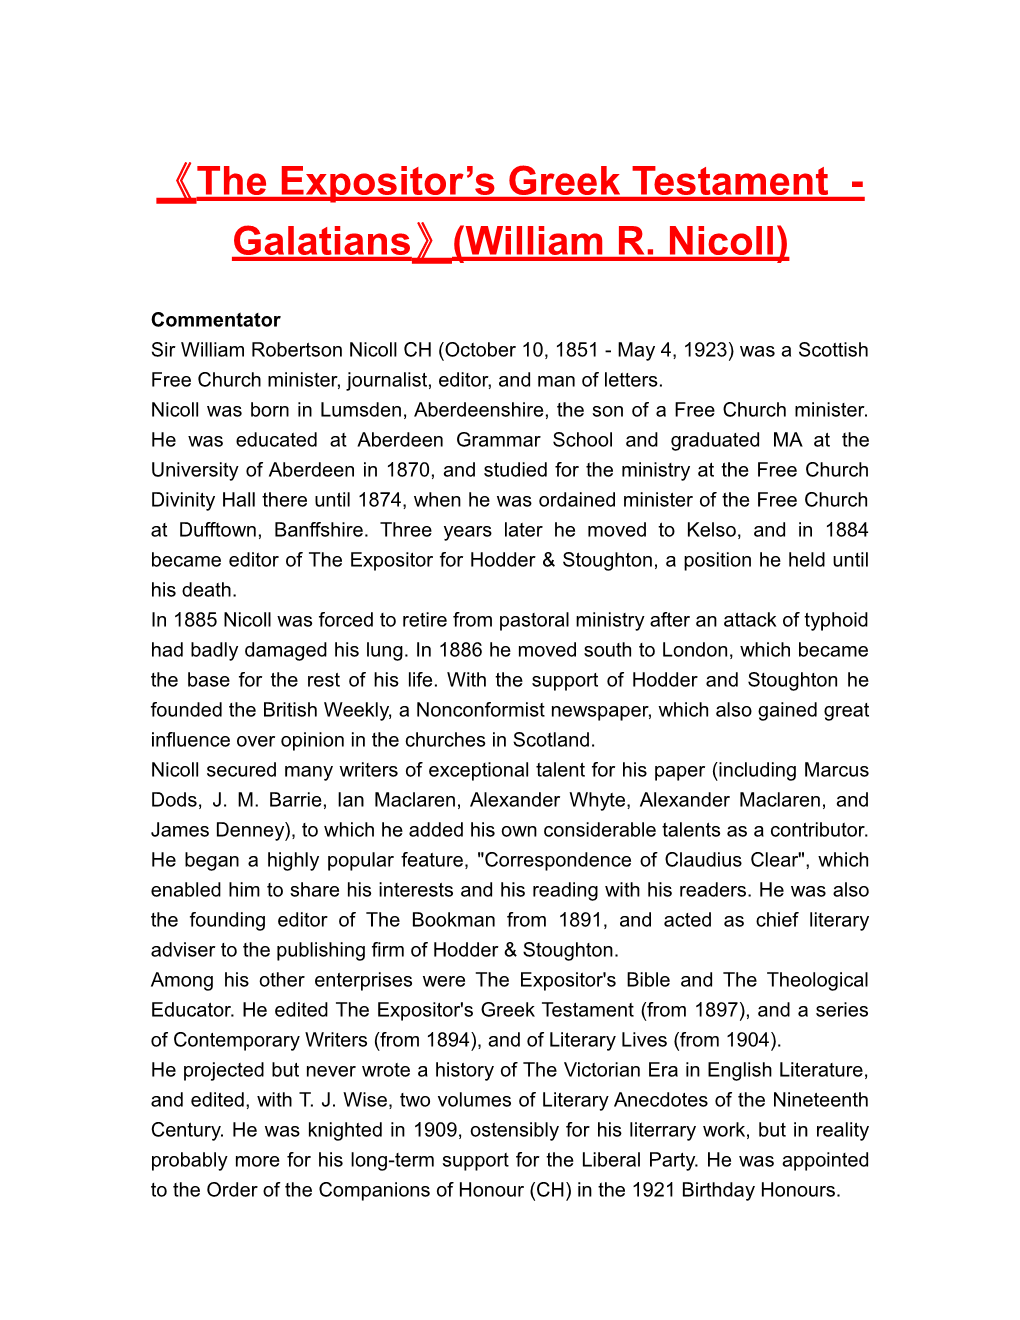 The Expositor Sgreek Testament -Galatians (William R. Nicoll)